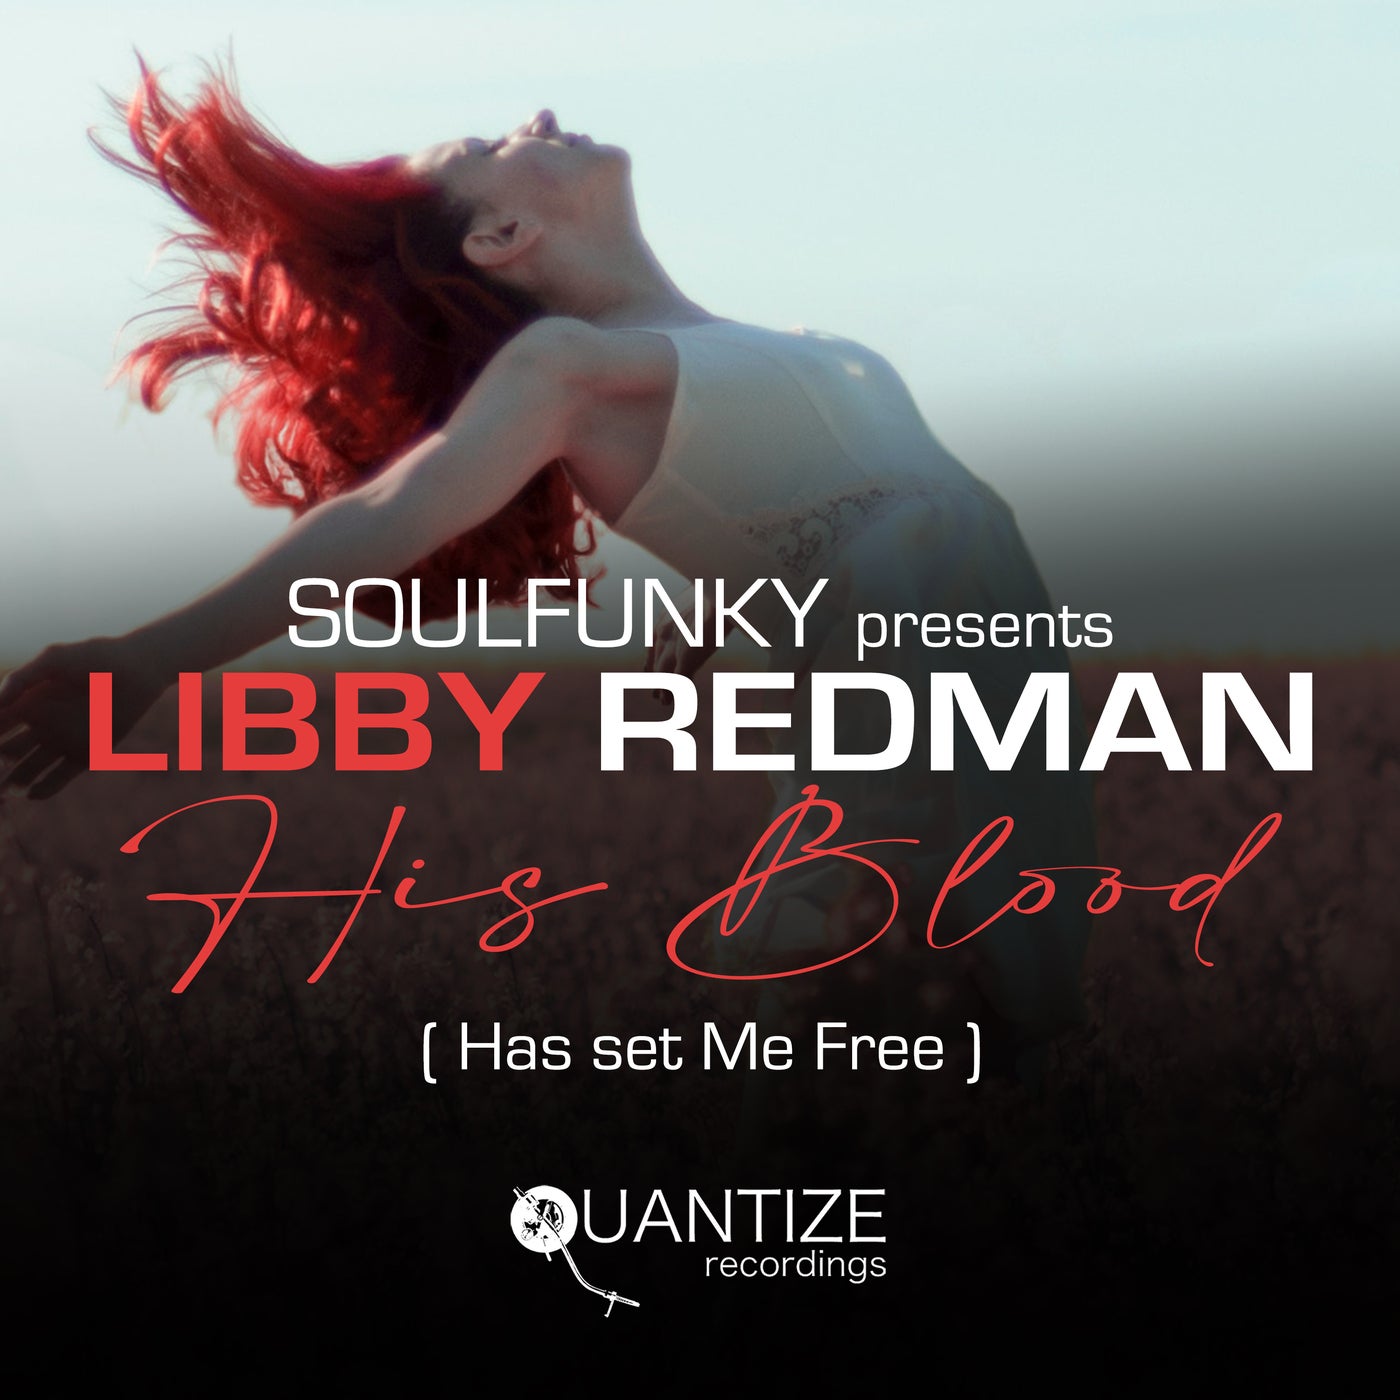 His Blood (Has Set Me Free)